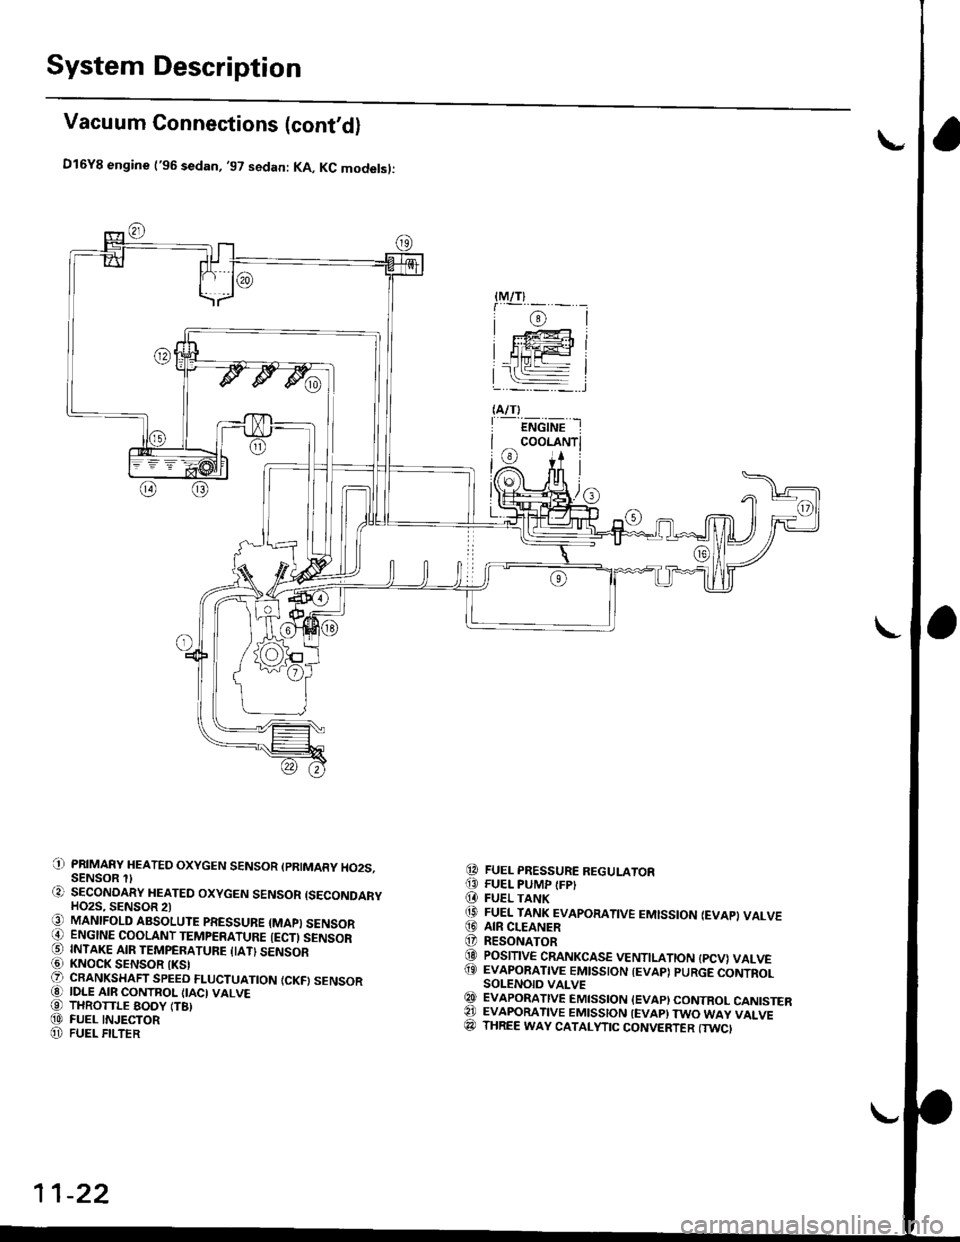 HONDA CIVIC 1998 6.G Workshop Manual System Description
Vacuum Connections (contd)
D16Y8 engine (96 sedan, 97 sedan: KA, KC modelsl:
PRIMARY HEATED OXYGEN SENSOR (PRIMARY HO2S.SENSOR  SECONOARY HEATED OXYGEN SENSOR {SECONDARYHO2S, SEN